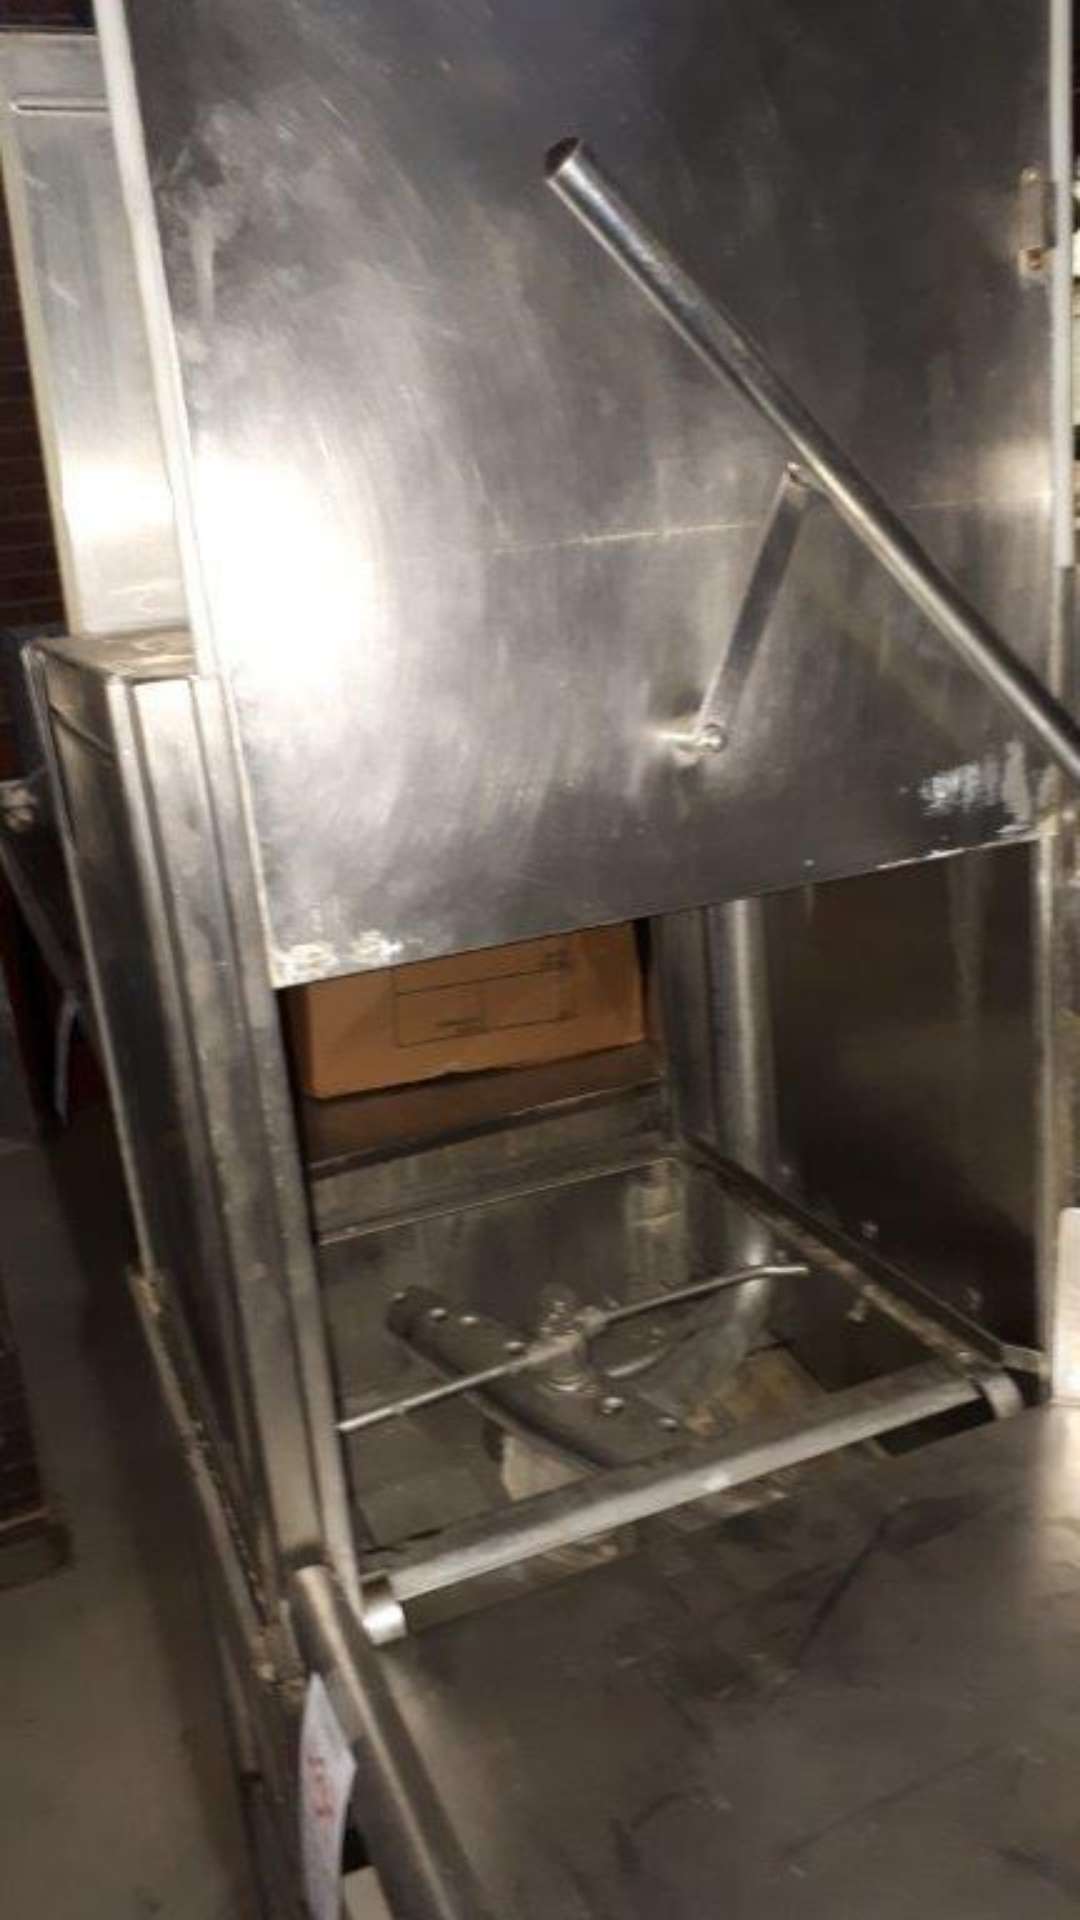 Hobart stainless steel dishwasher, model: AM14 - Image 2 of 7